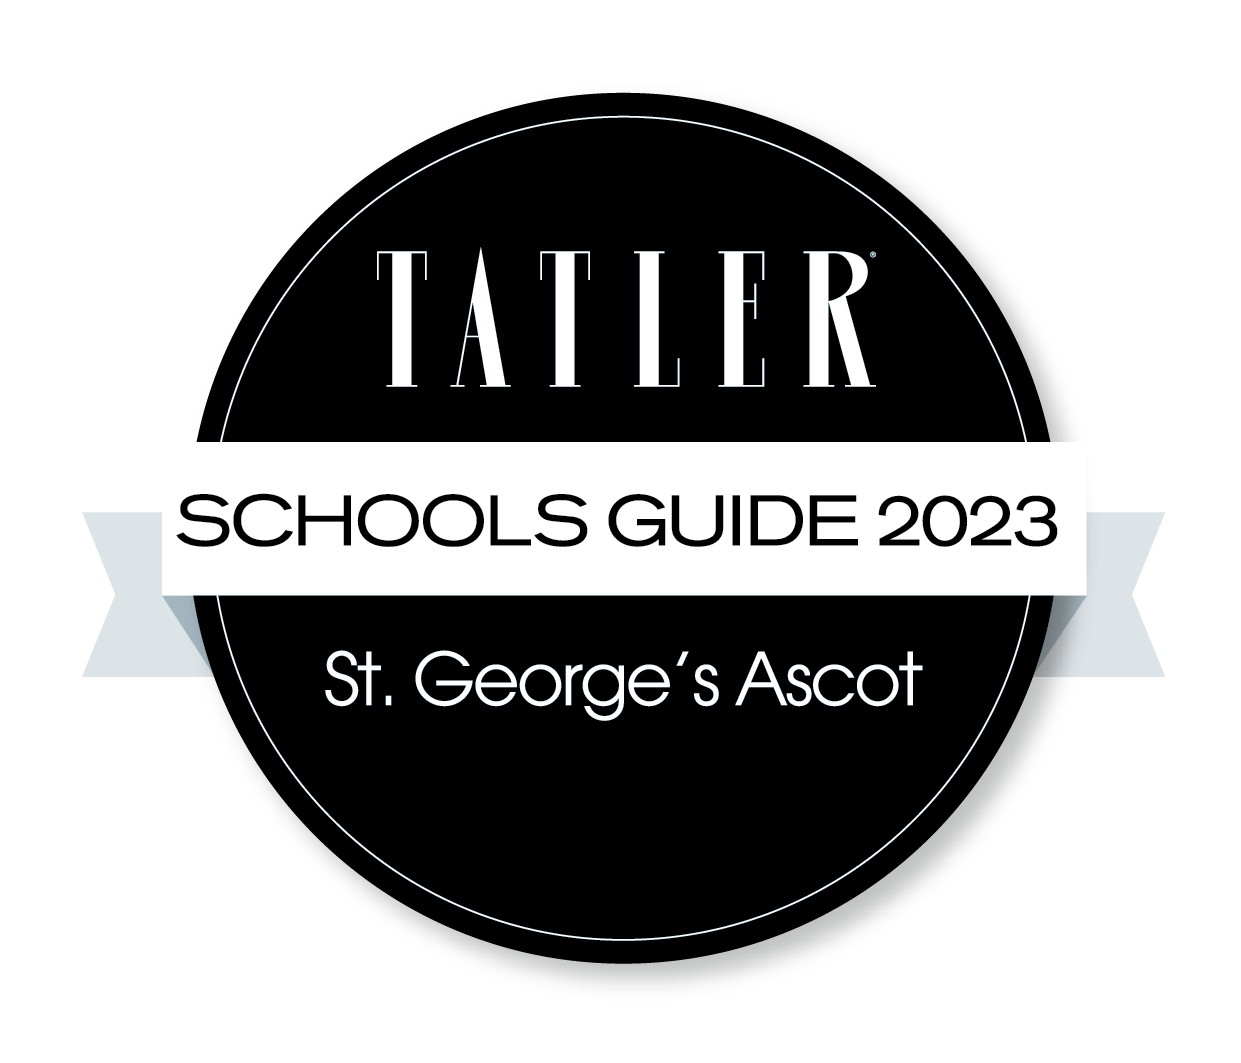 Tatler Schools Guide 2023